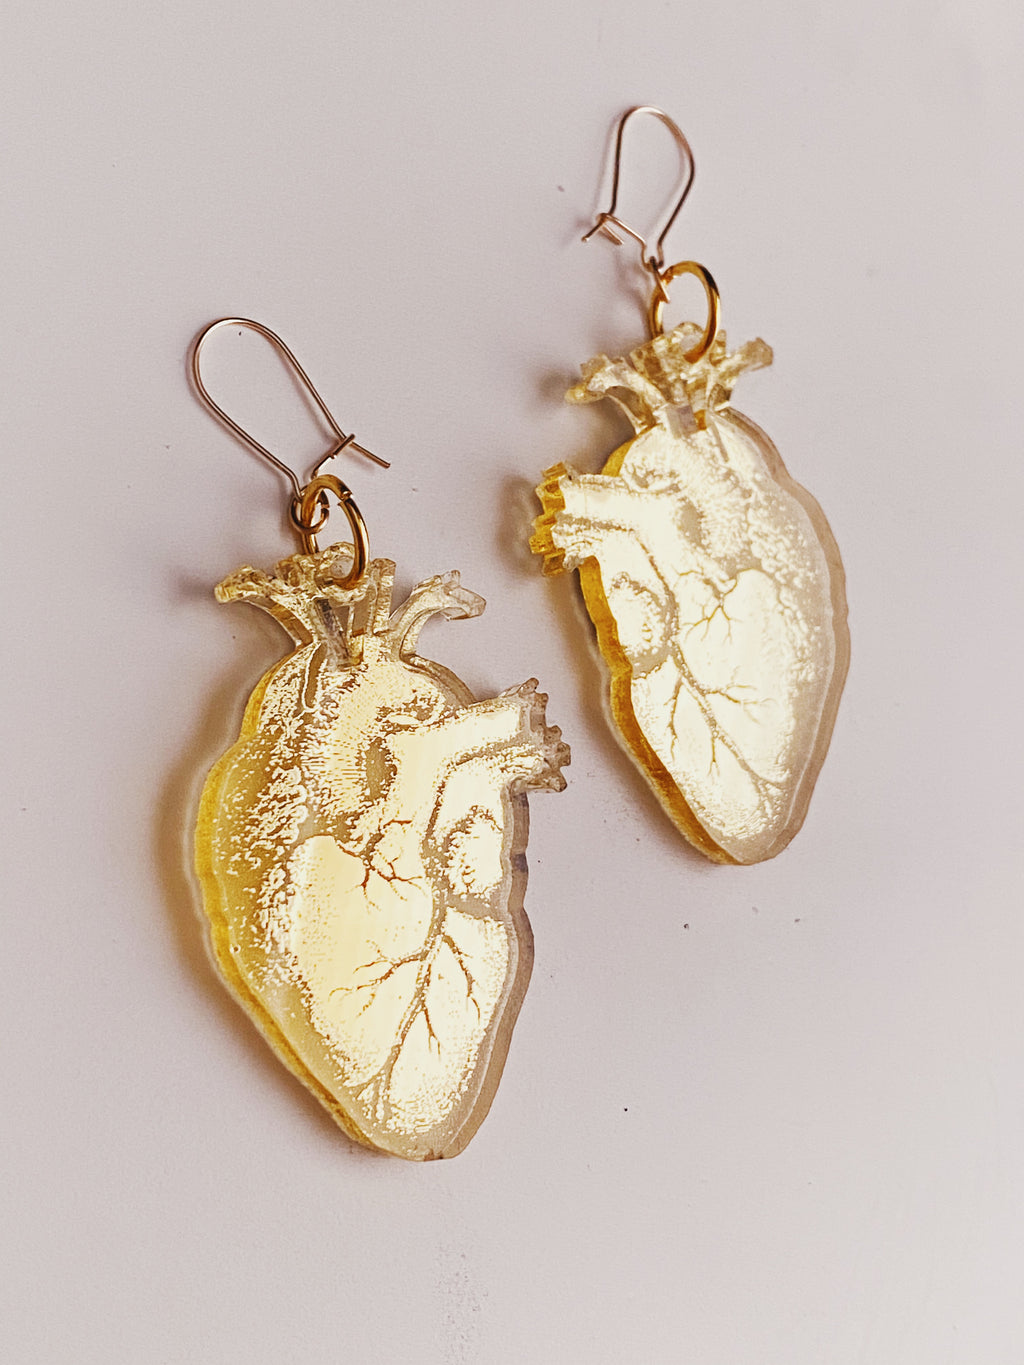 Real Heart Mirrored Earrings 14k Gold Filled - Moon Goddess Market